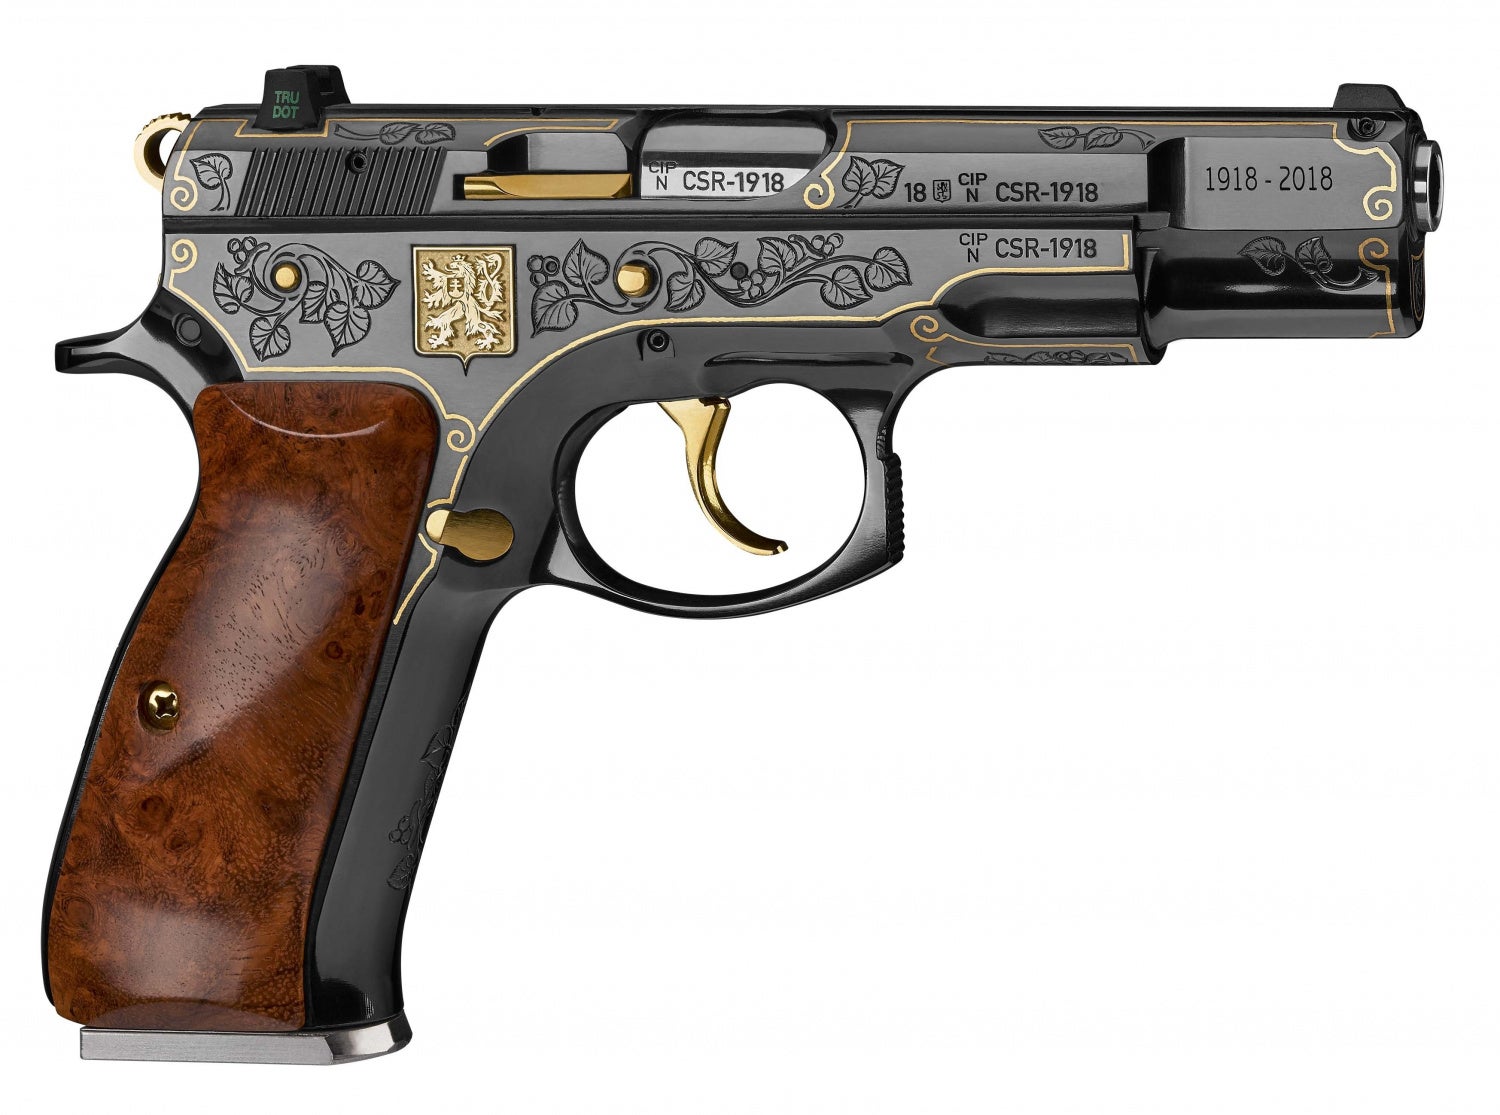 CZ 75 Republika pistol given to President Trump